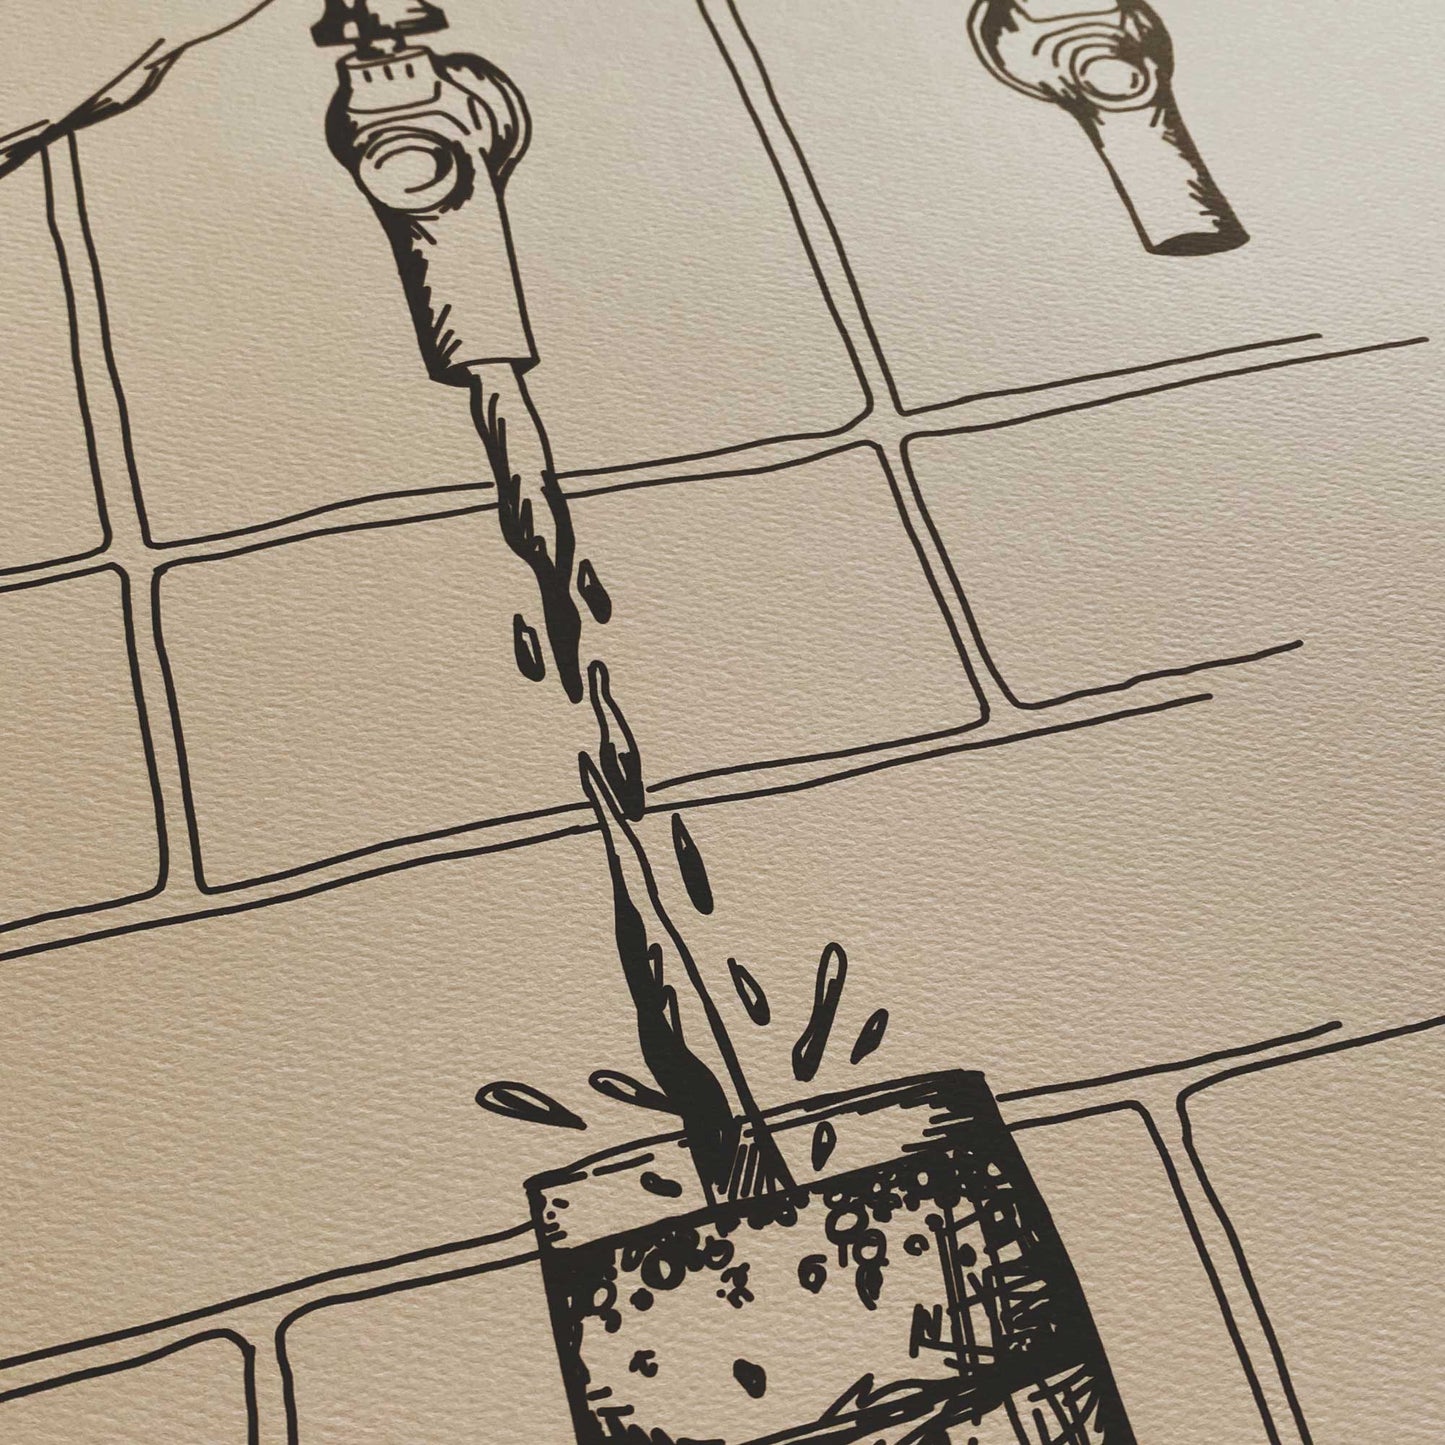 Beer Tap Illustration For Beer Lovers - Detail Closeup - By Brisbane Illustrator Sheridan Eveline